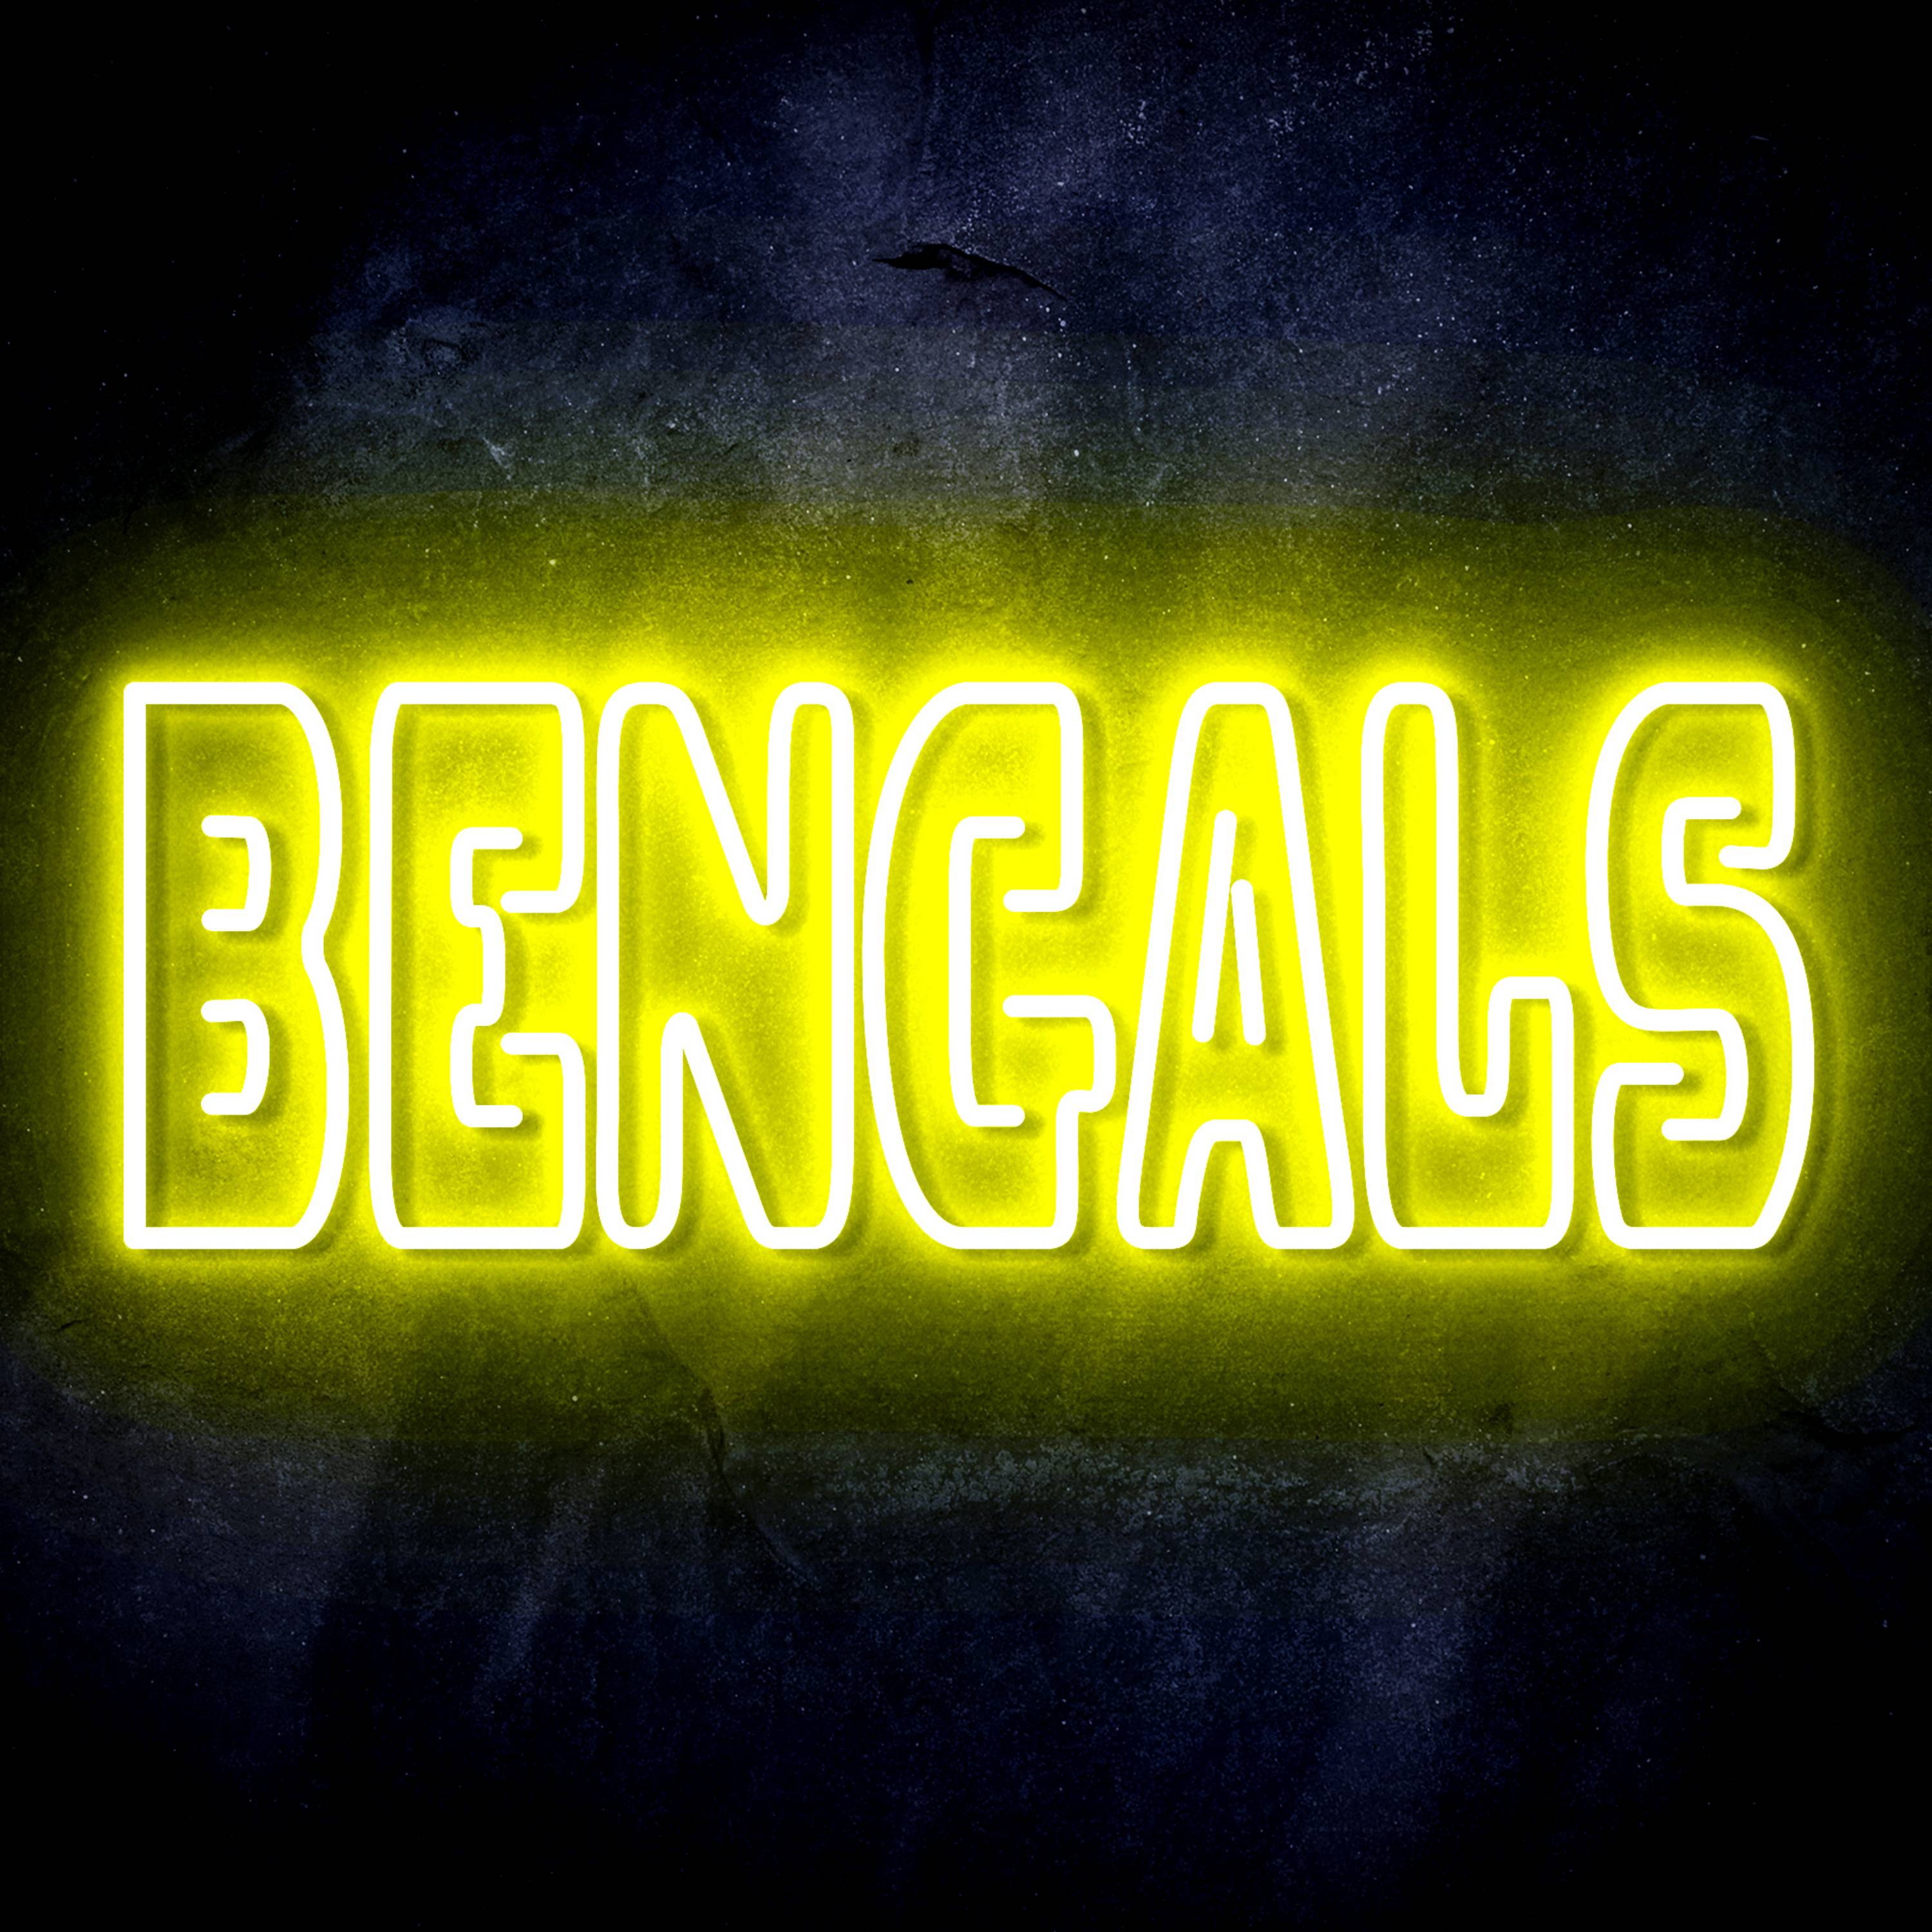 NFL BENGALS LED Neon Sign